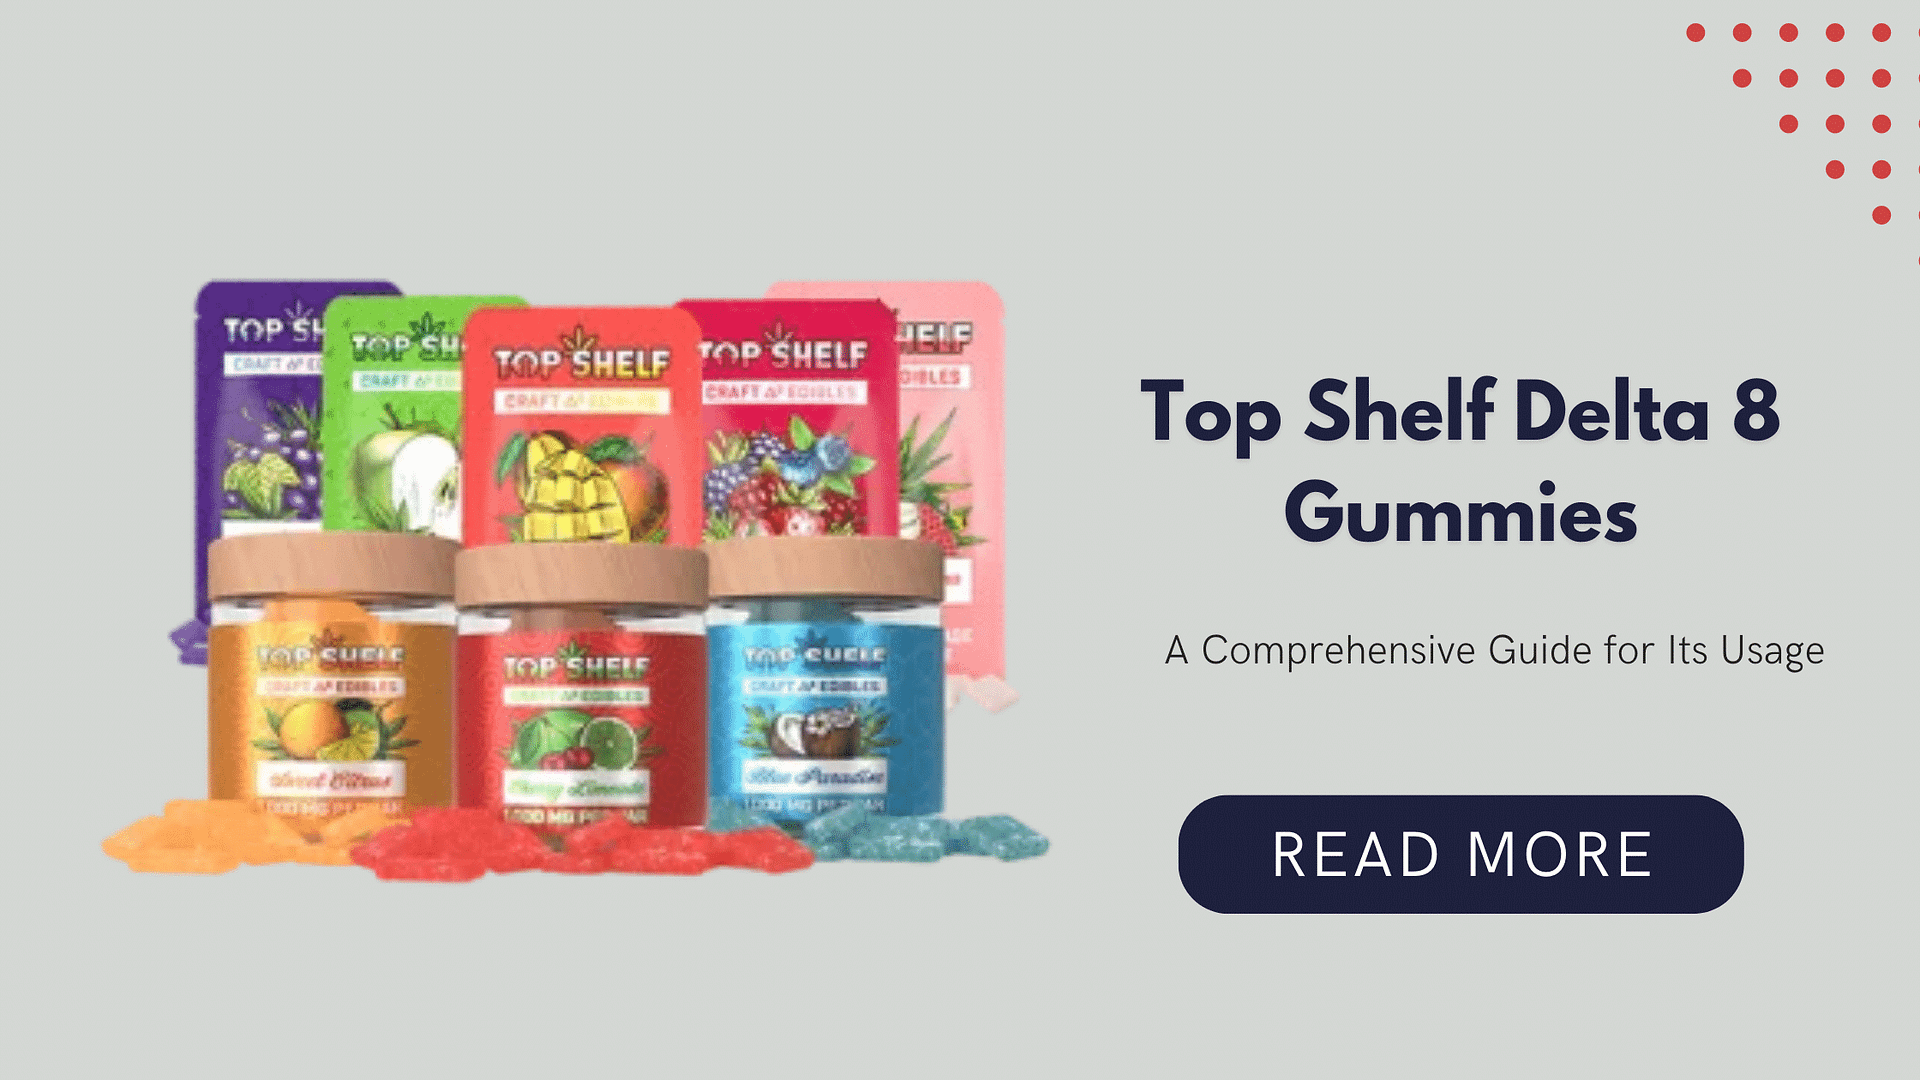 Top Shelf Delta 8 Gummies